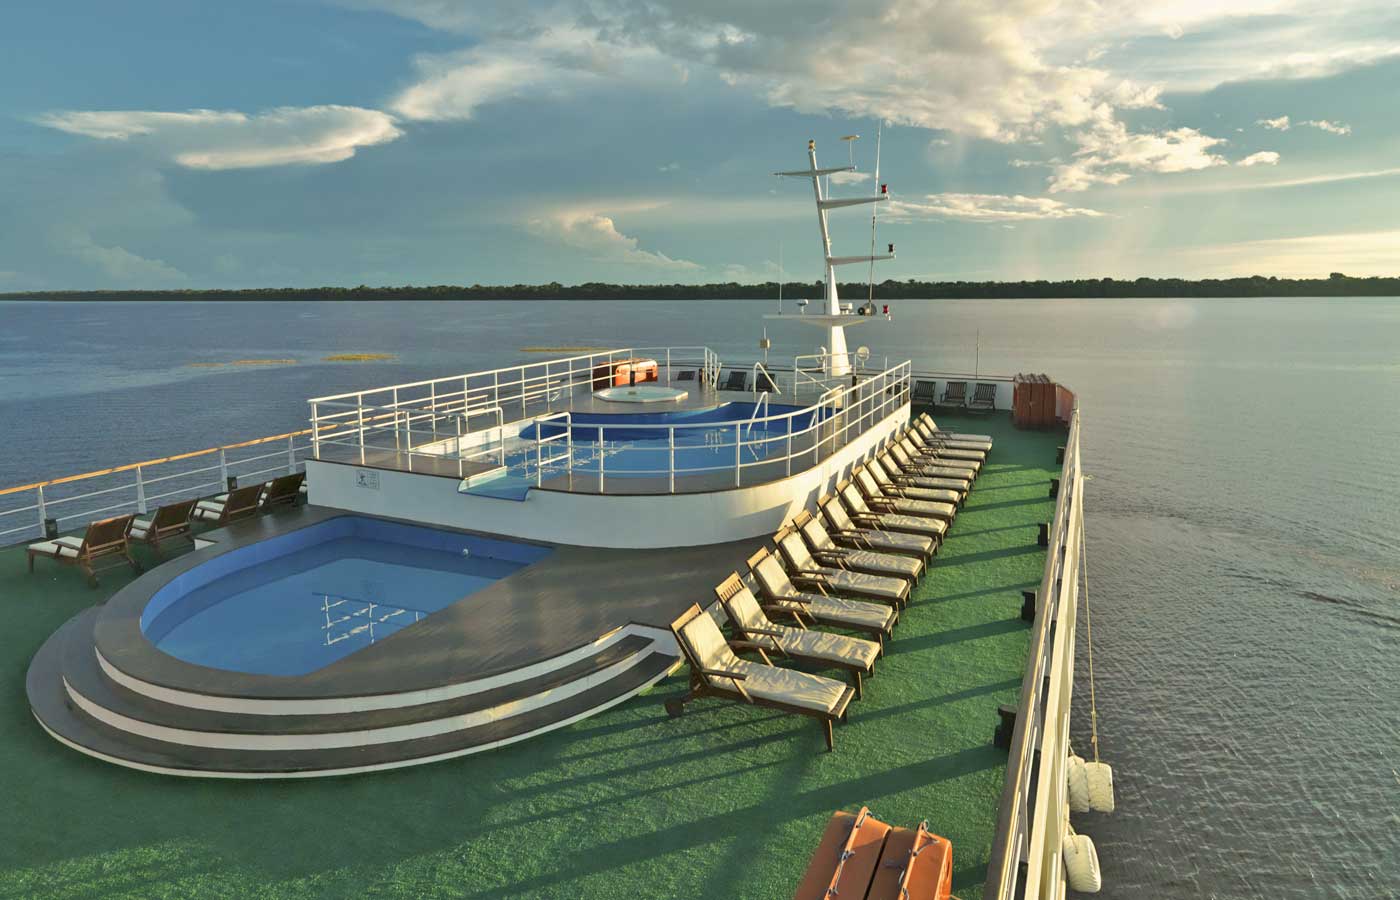 Iberostar Grand Amazon Cruise Explore The Amazon River In Style